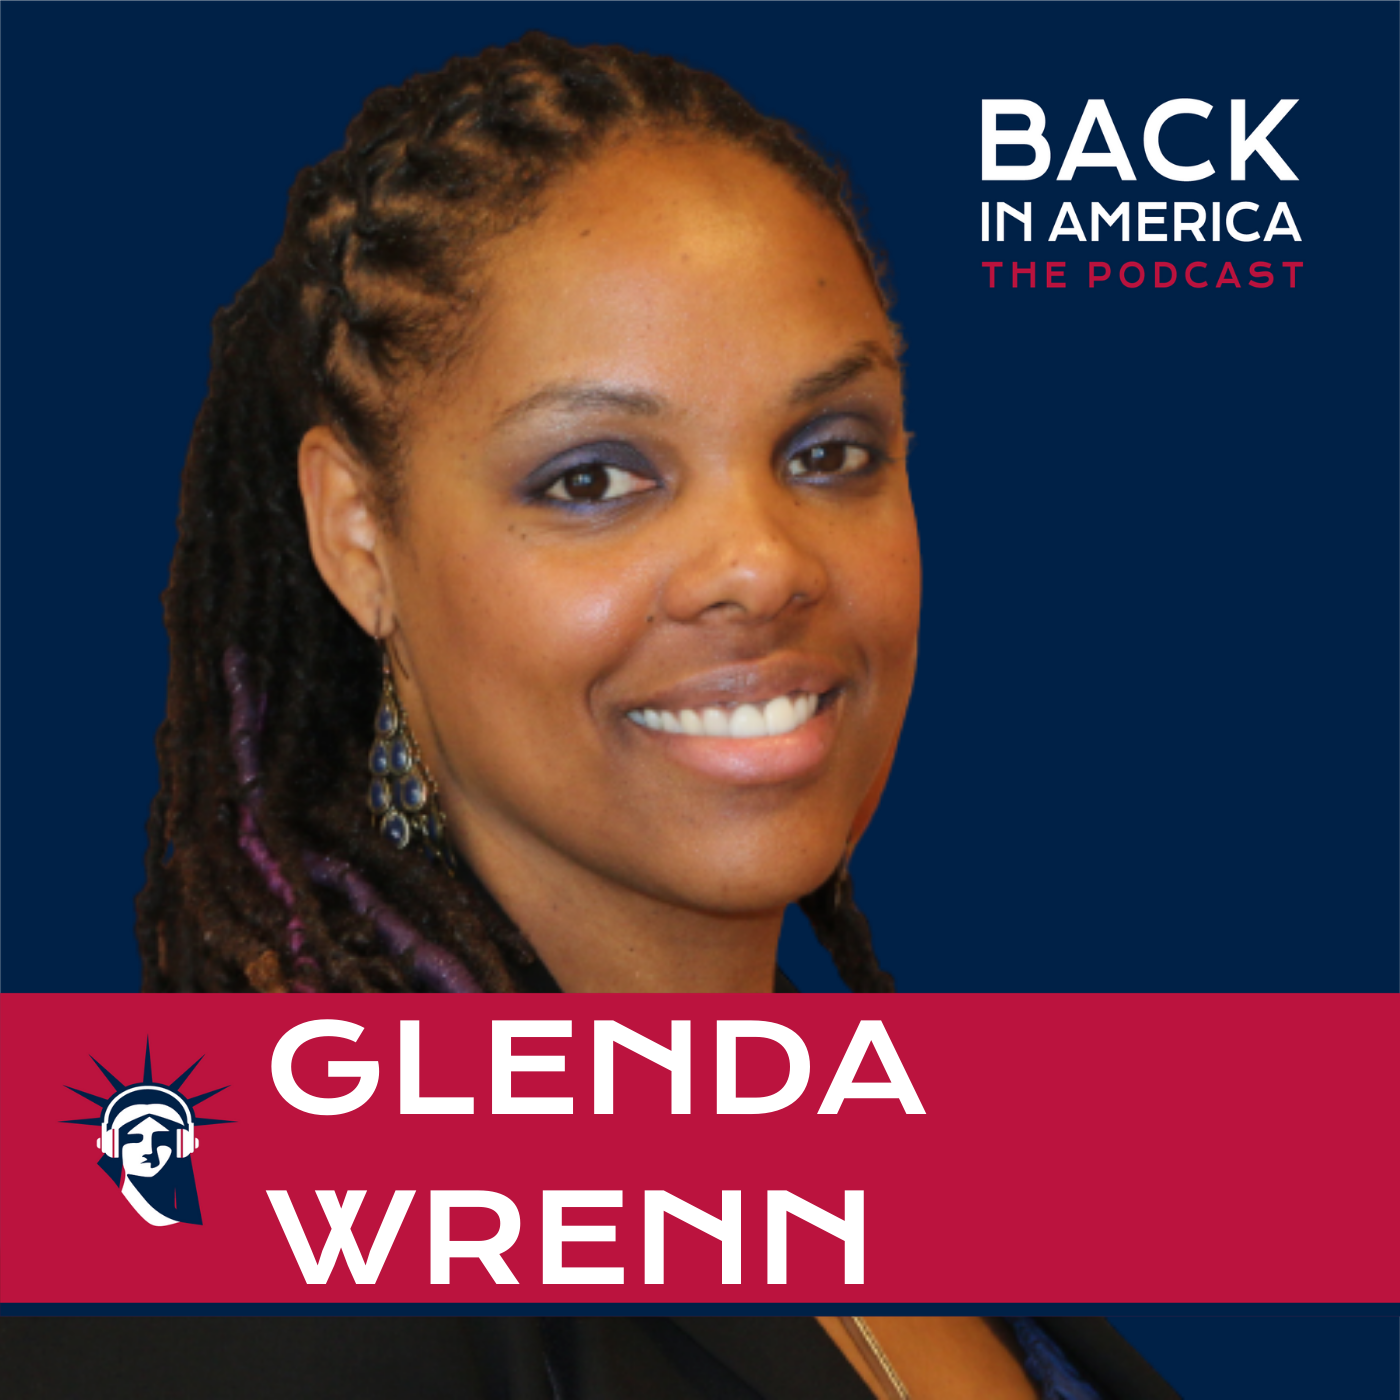 Glenda Wrenn covide mental health podcast back in america